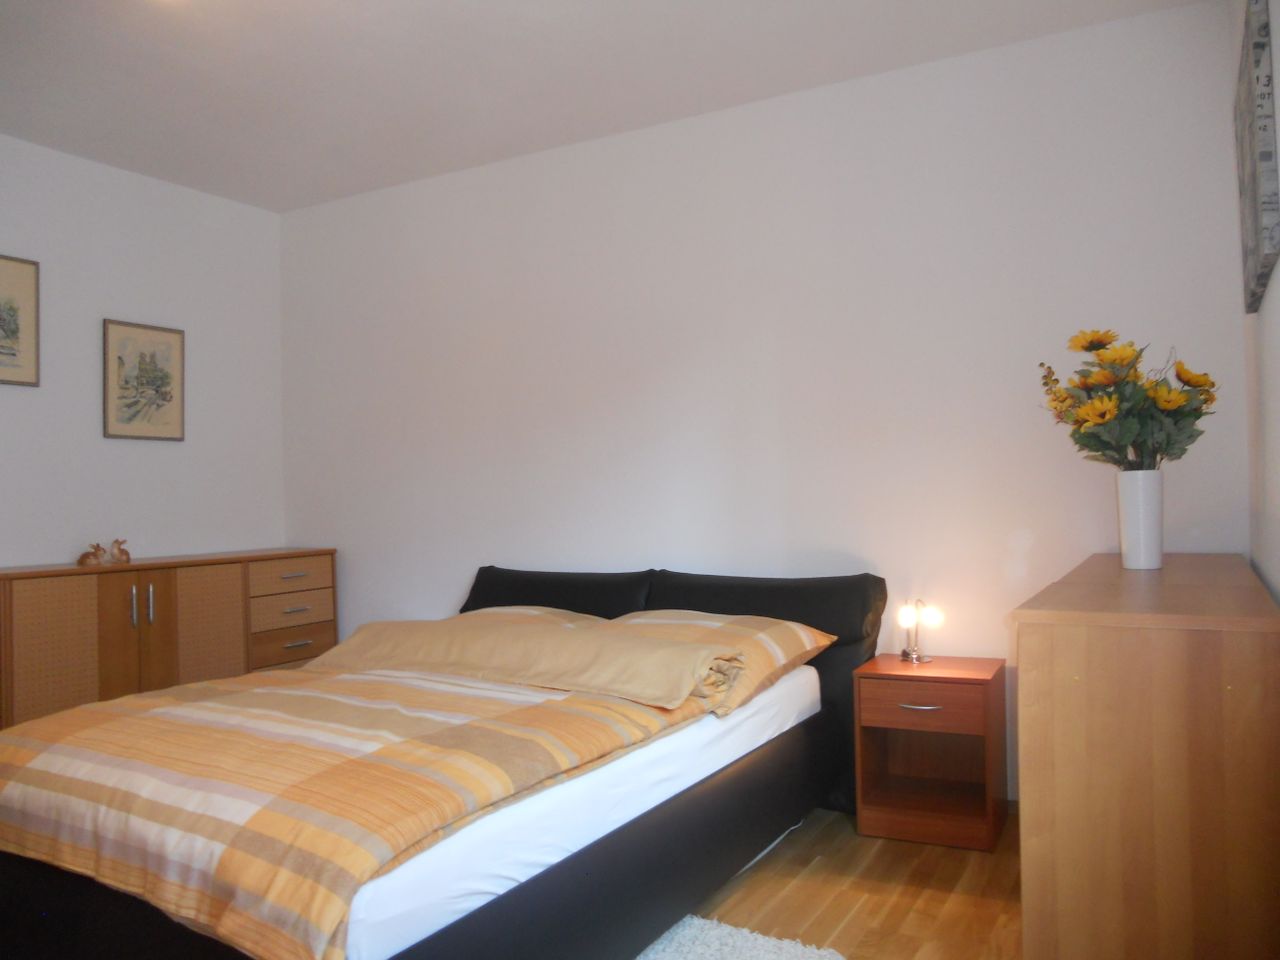 Wonderful 3 room flat located in München